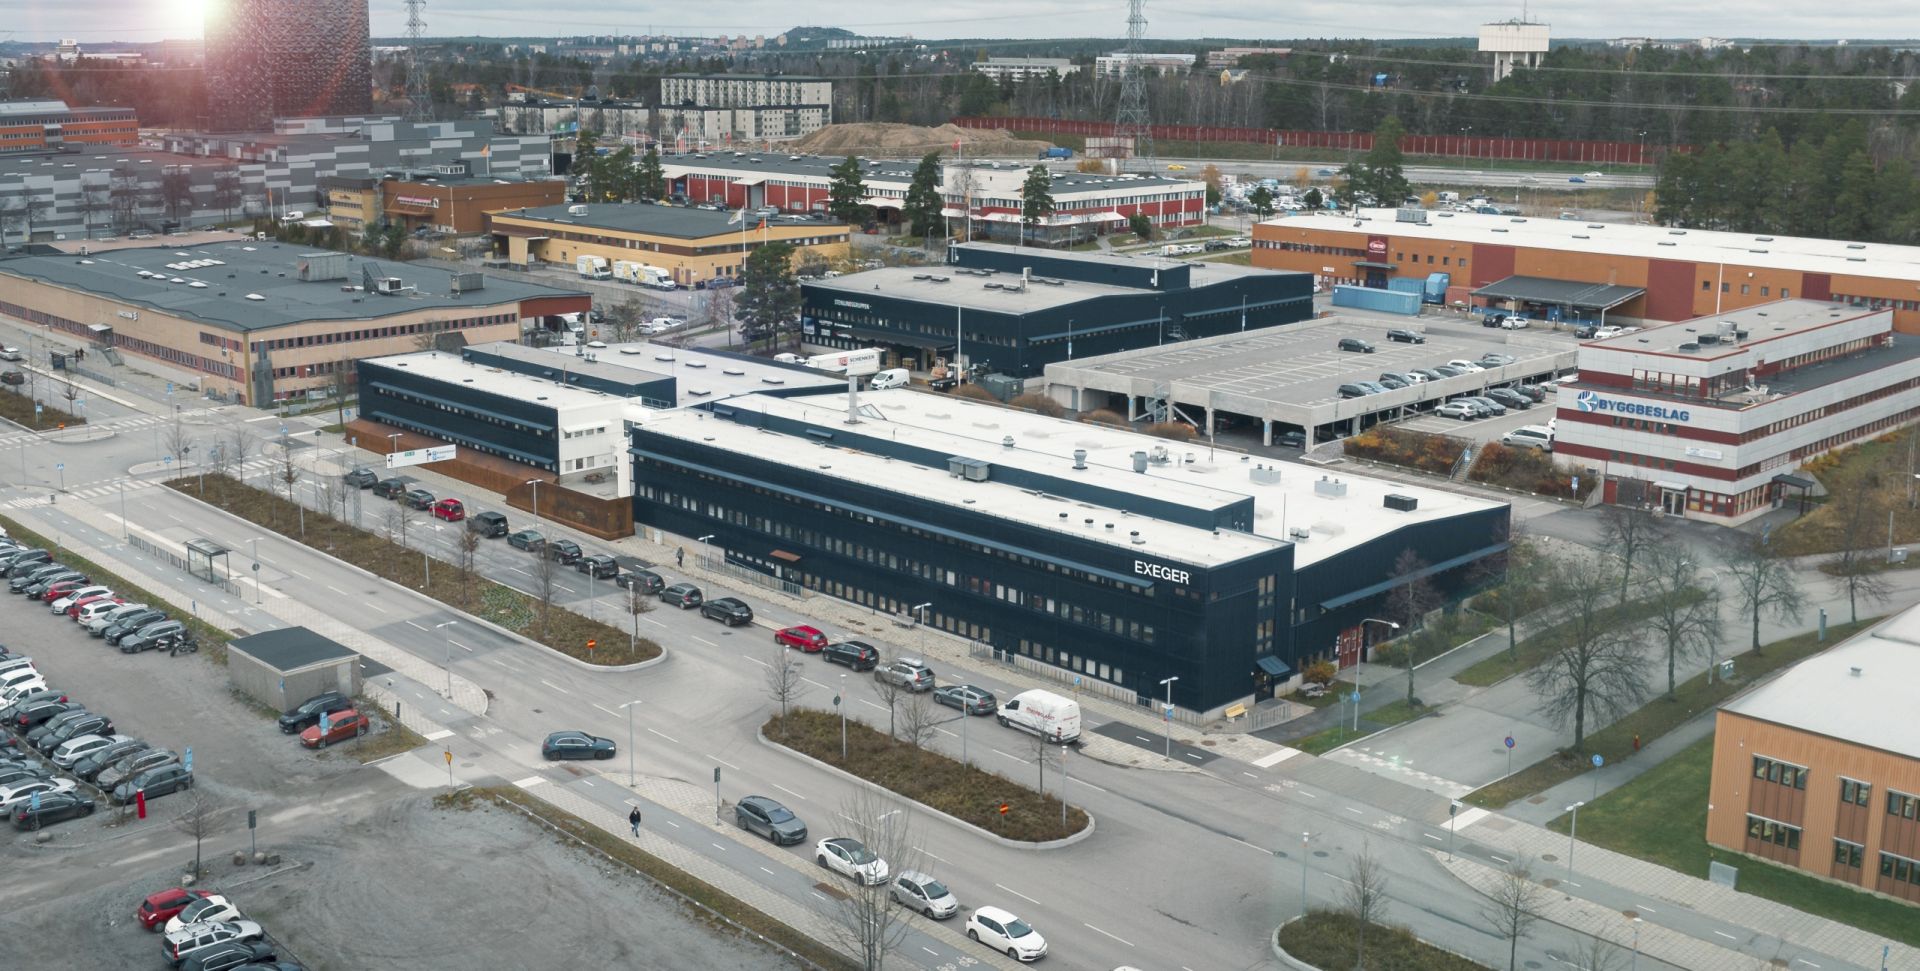 Exeger solar cell factory in stockholm sweden